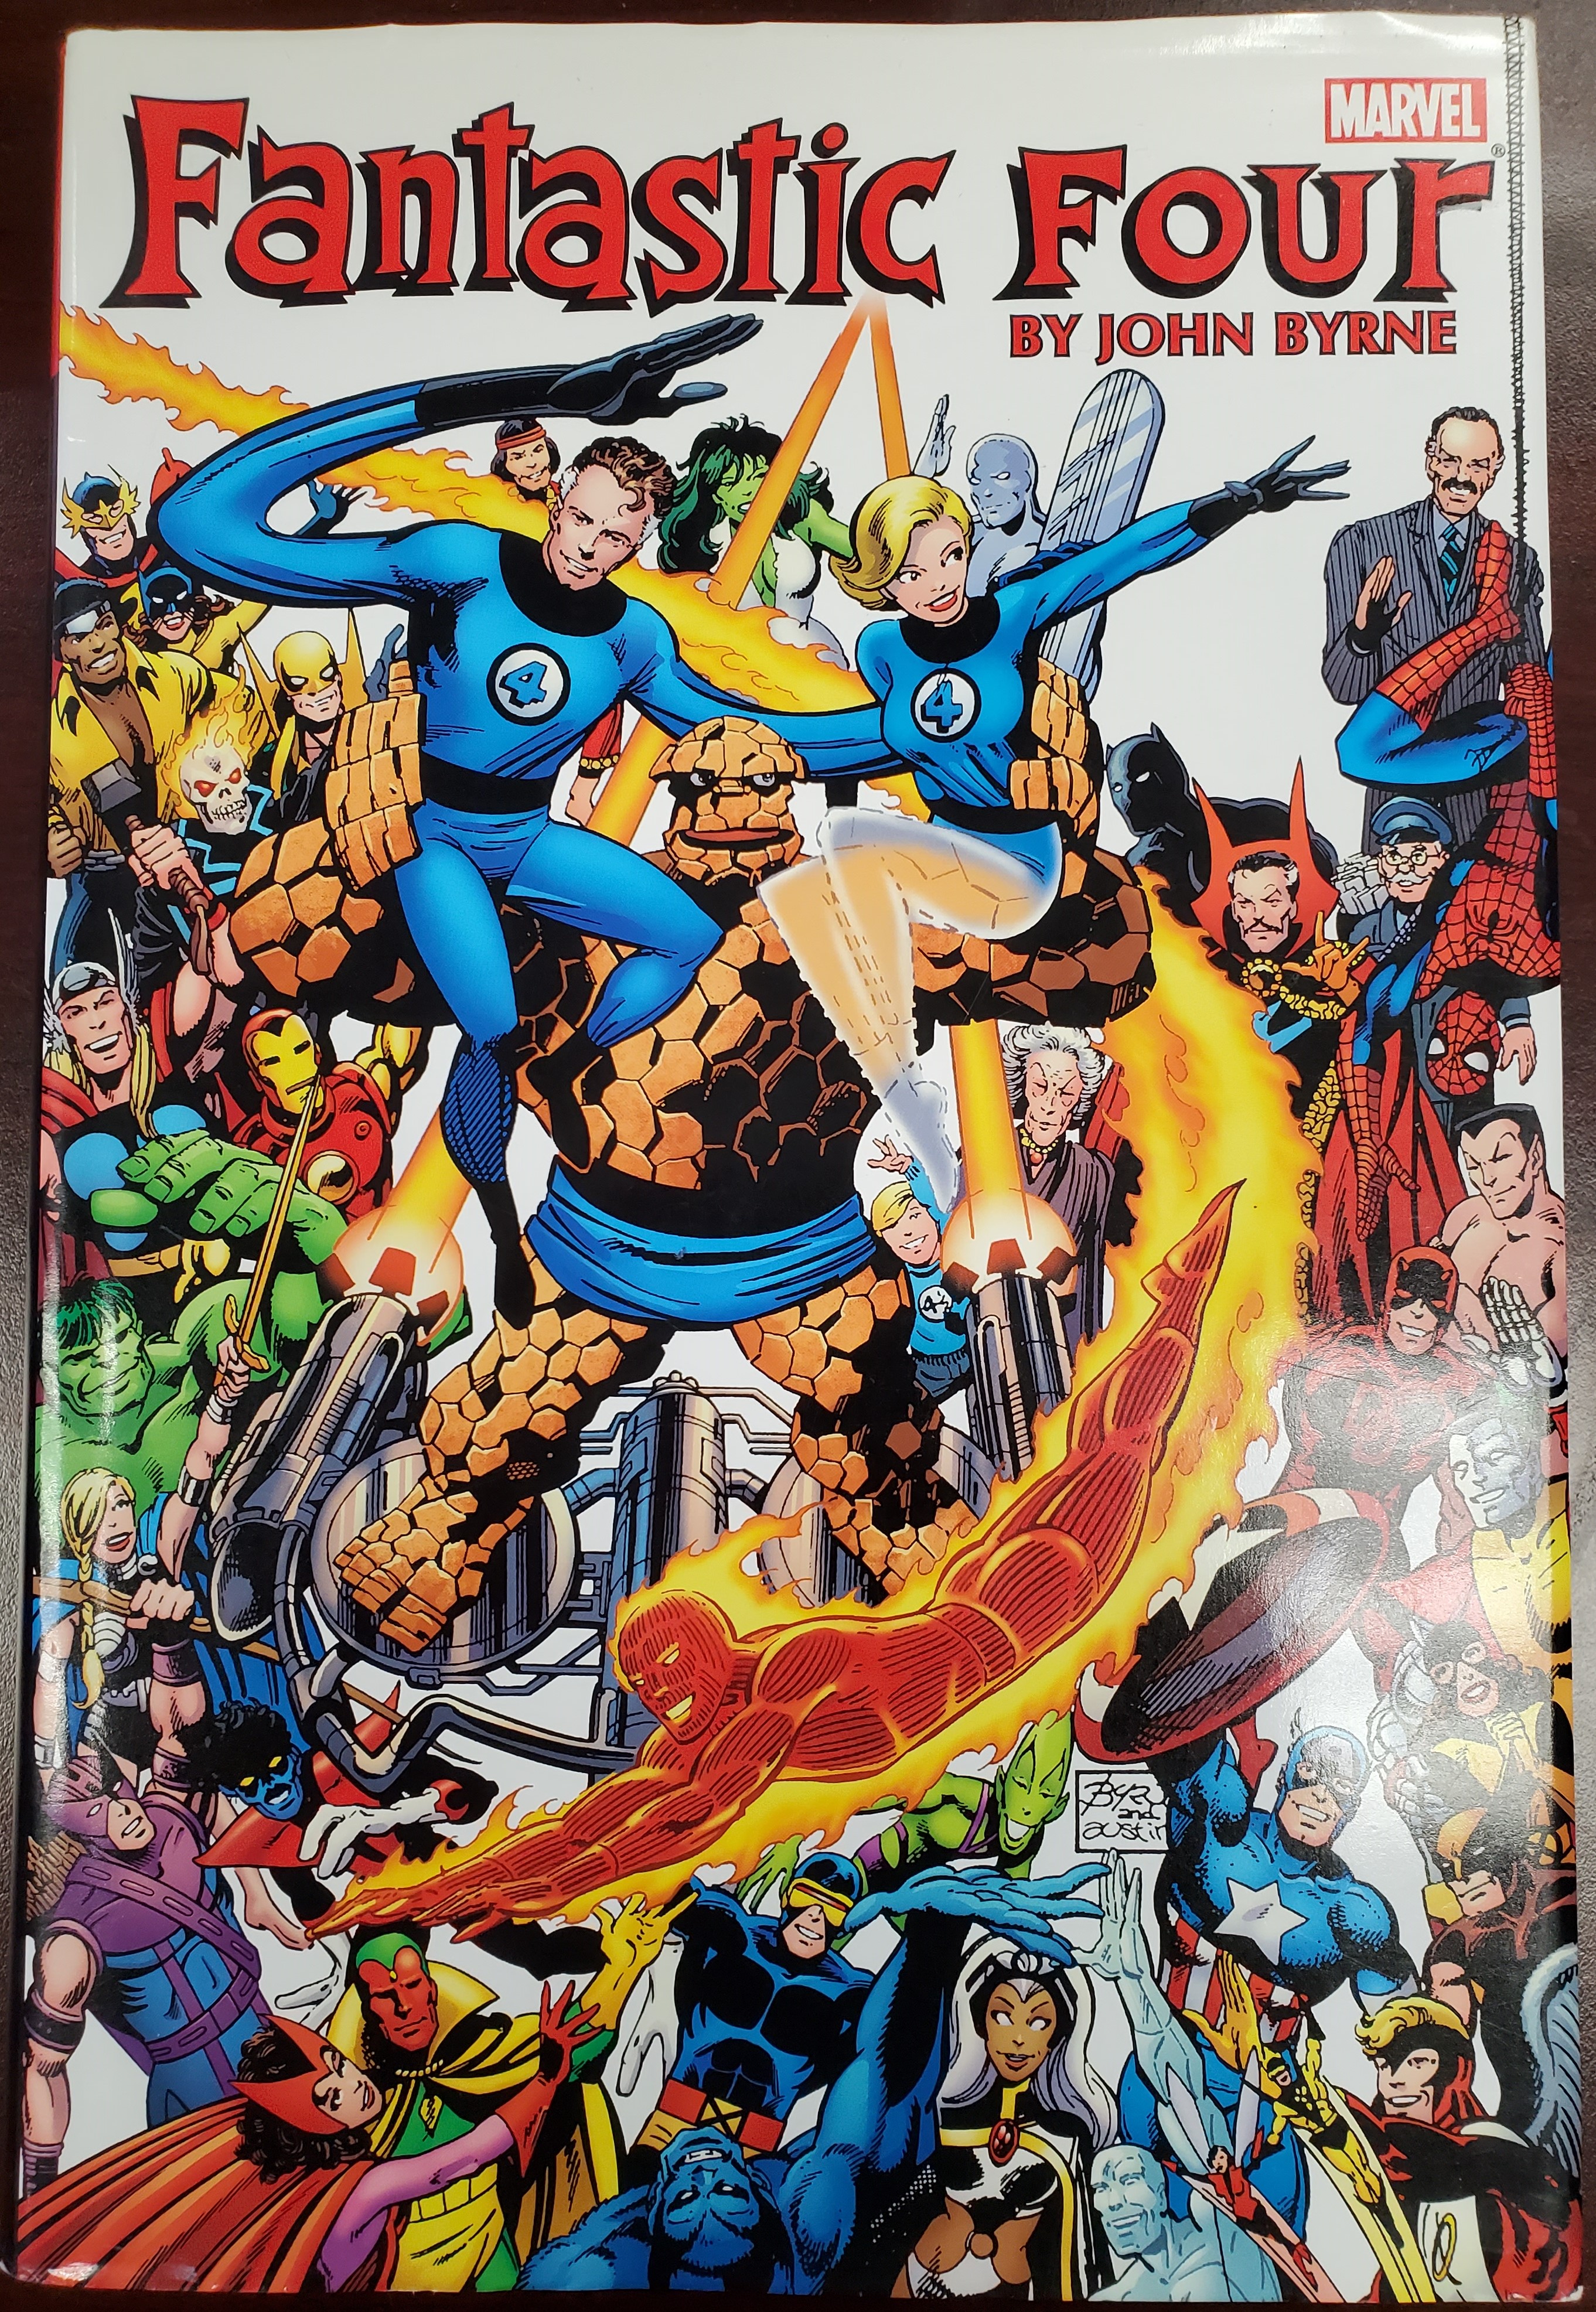 Fantastic Four By John Byrne Omnibus Hardcover Volume 1 Used -Very Good